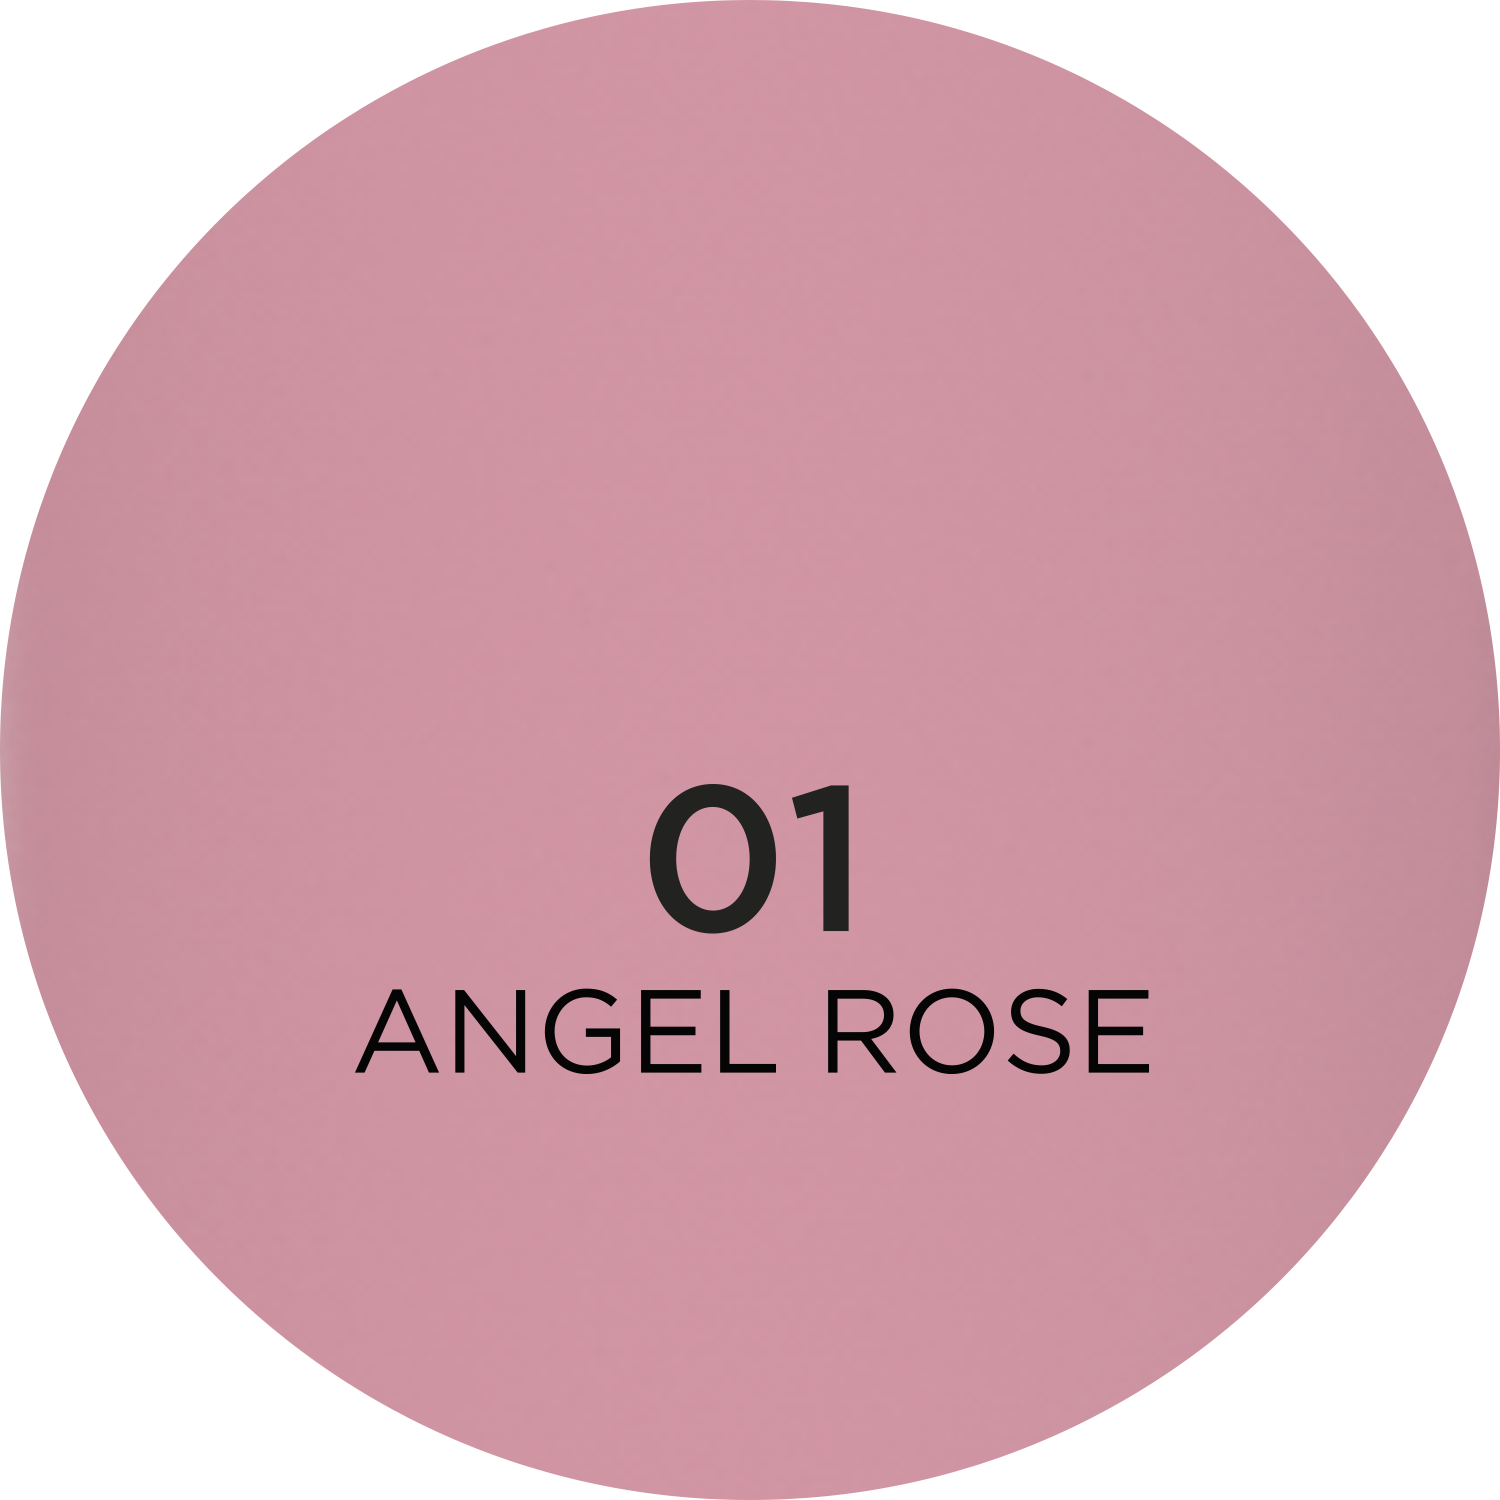 01 Angel rose